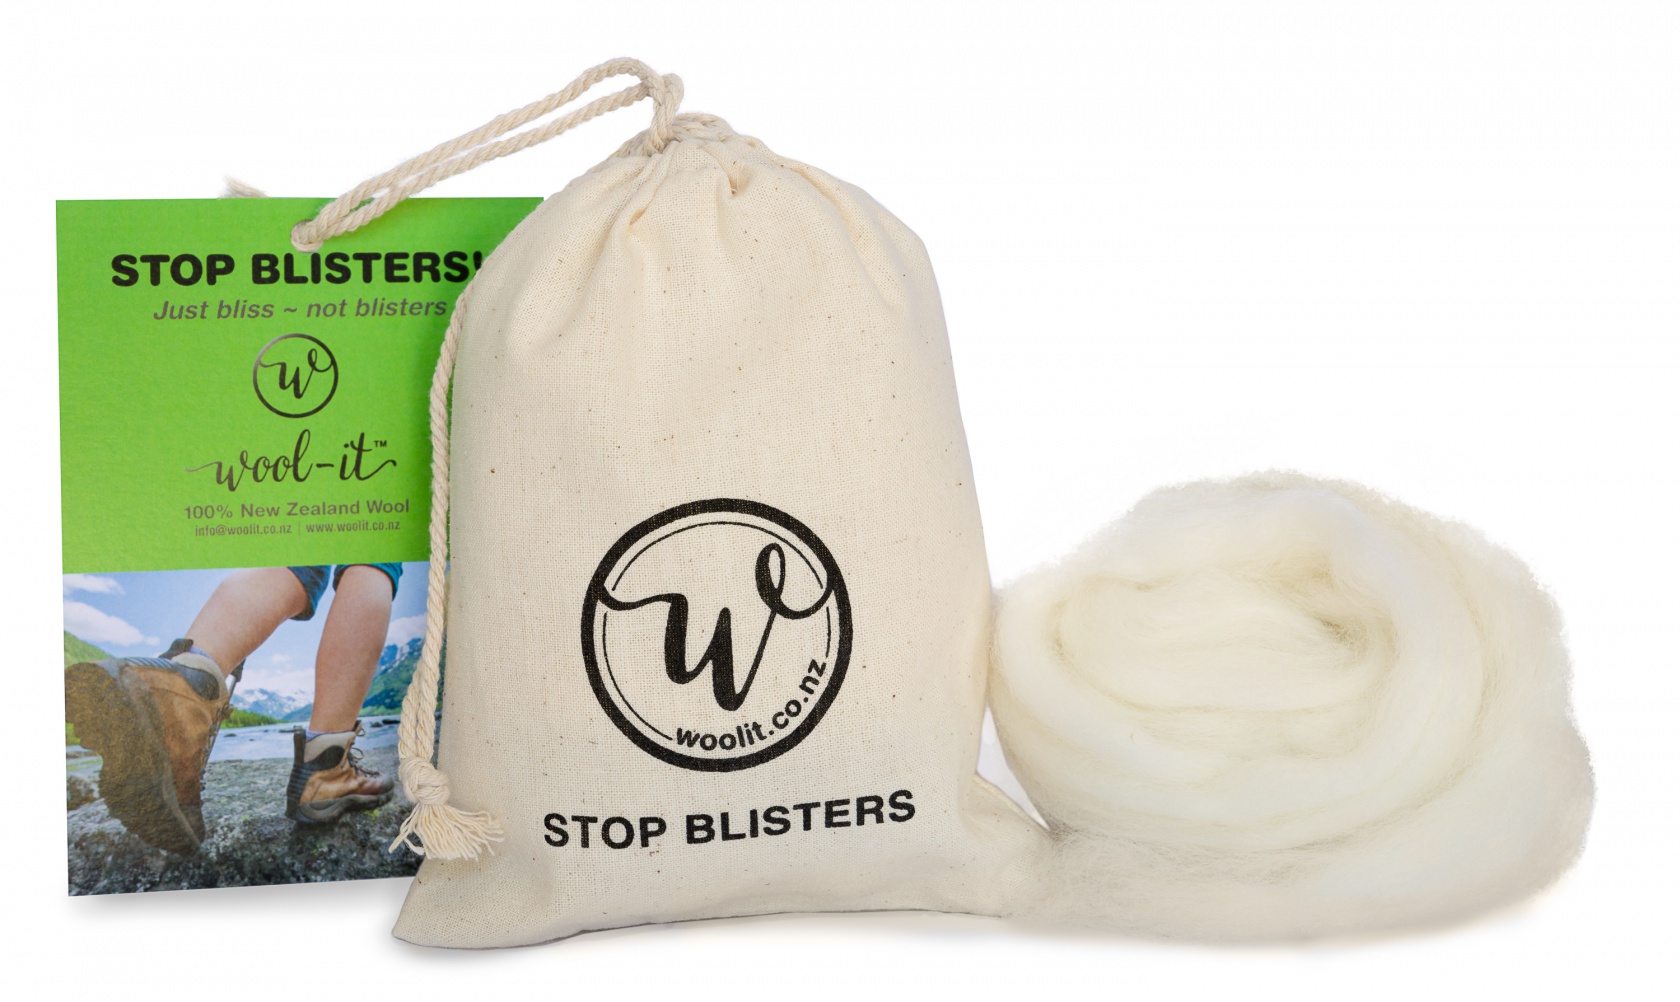 Wool-it Blister Prevention 20g Calico Bag